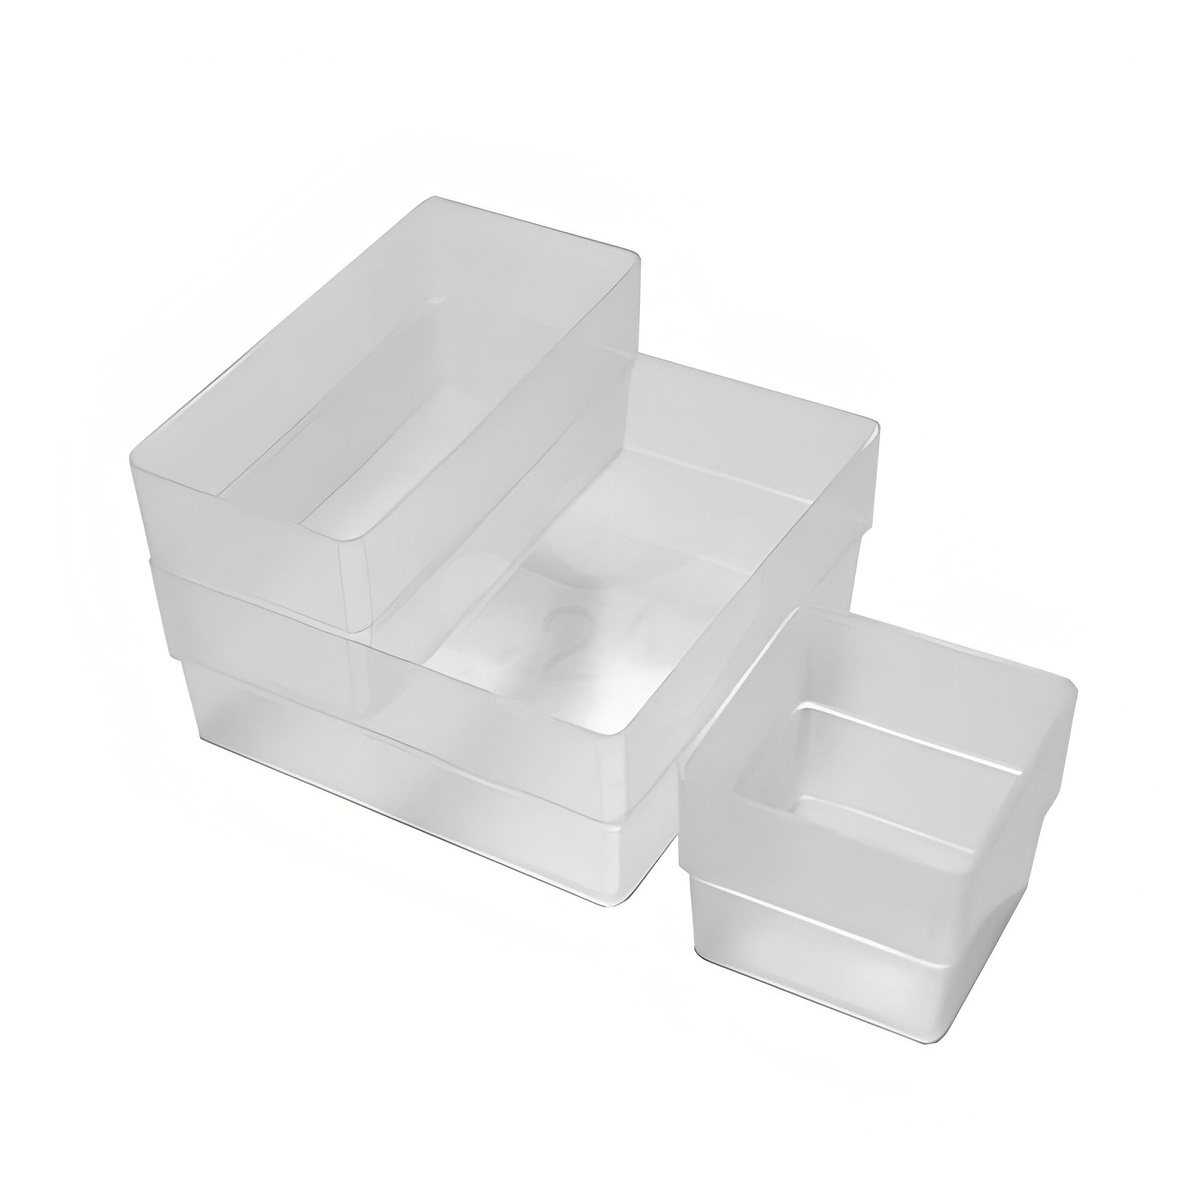 Alveo Trafiplastic  Cajas Organizadoras